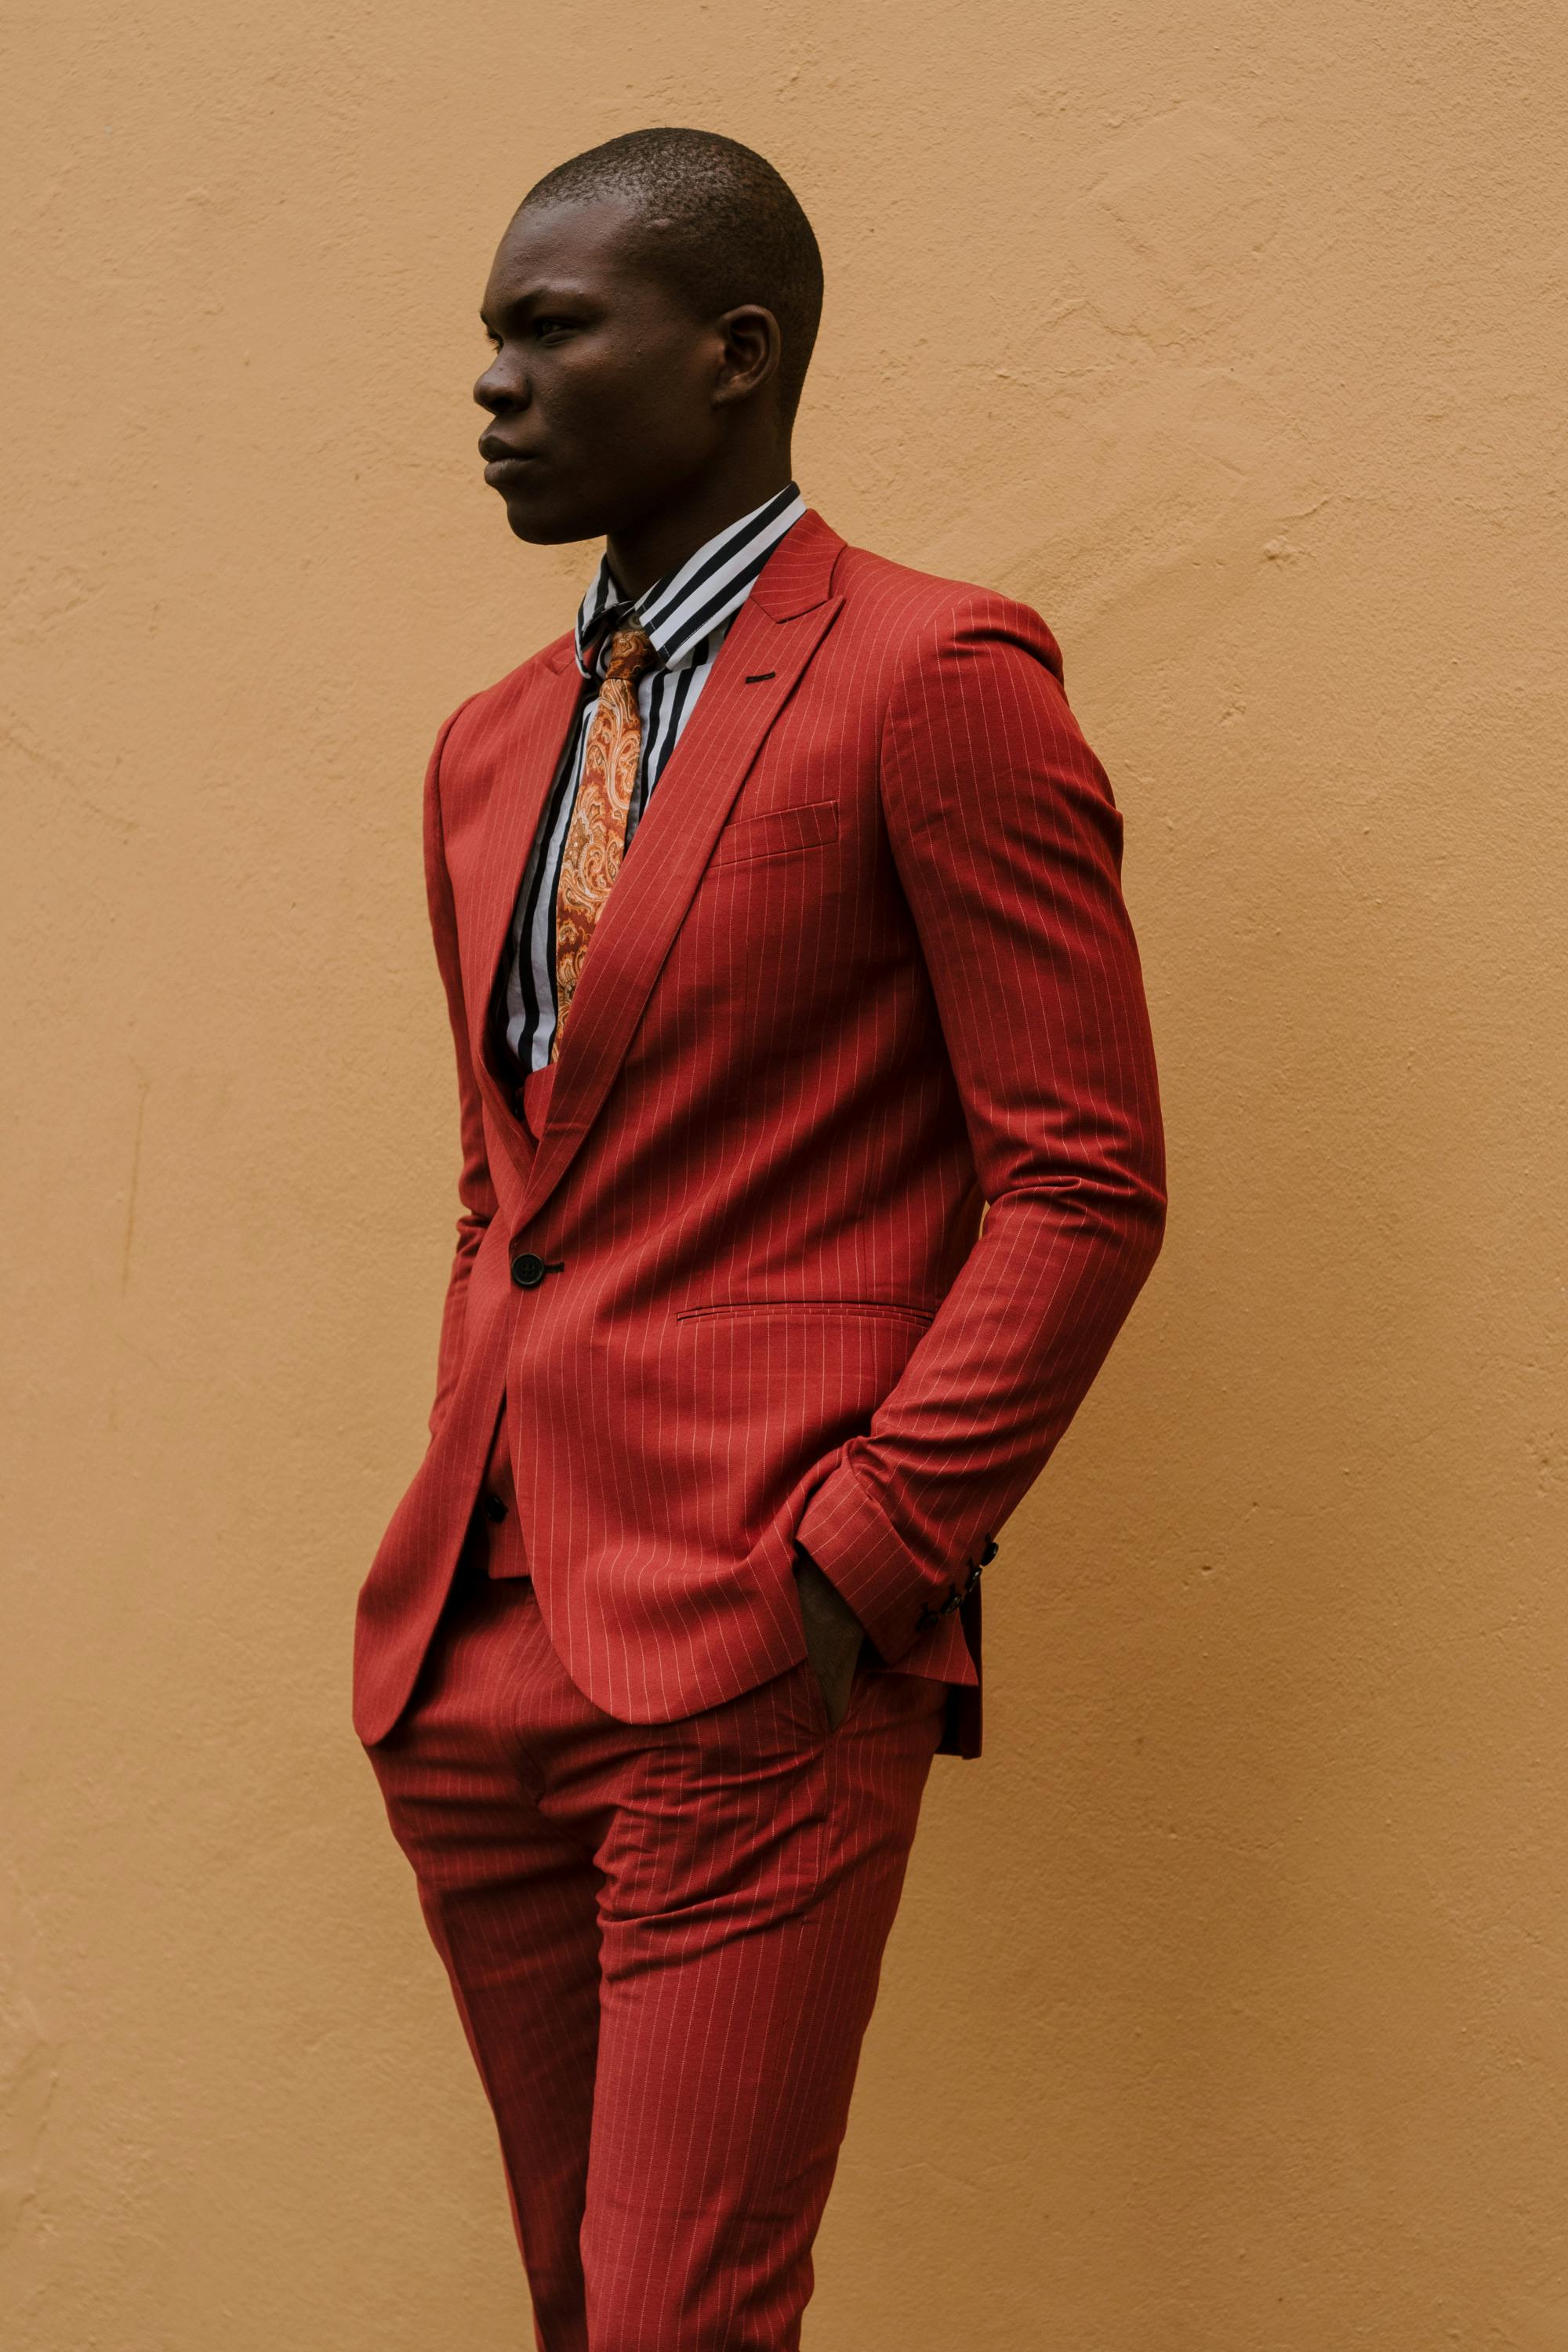 Elegant Handsome Man Classical Suit Poses Stock Photo 462957469 |  Shutterstock